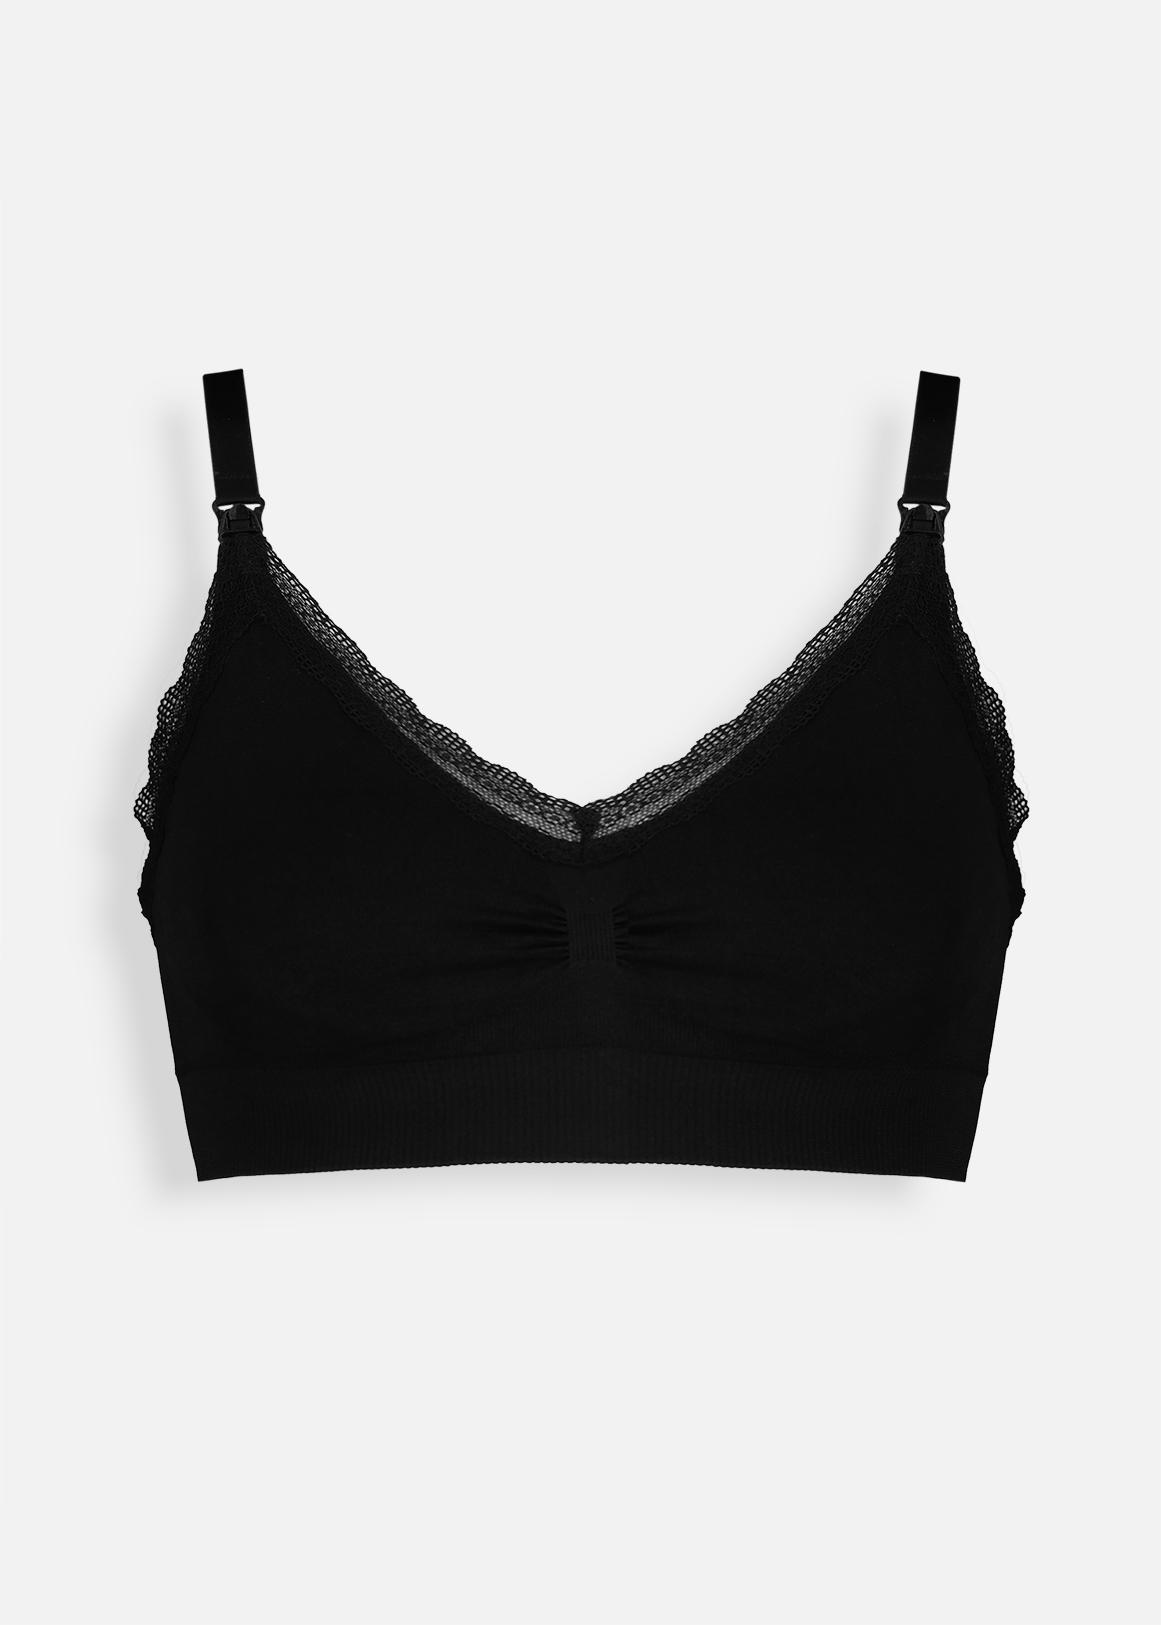 Black and cream lace nursing bra – The Pantry Underwear